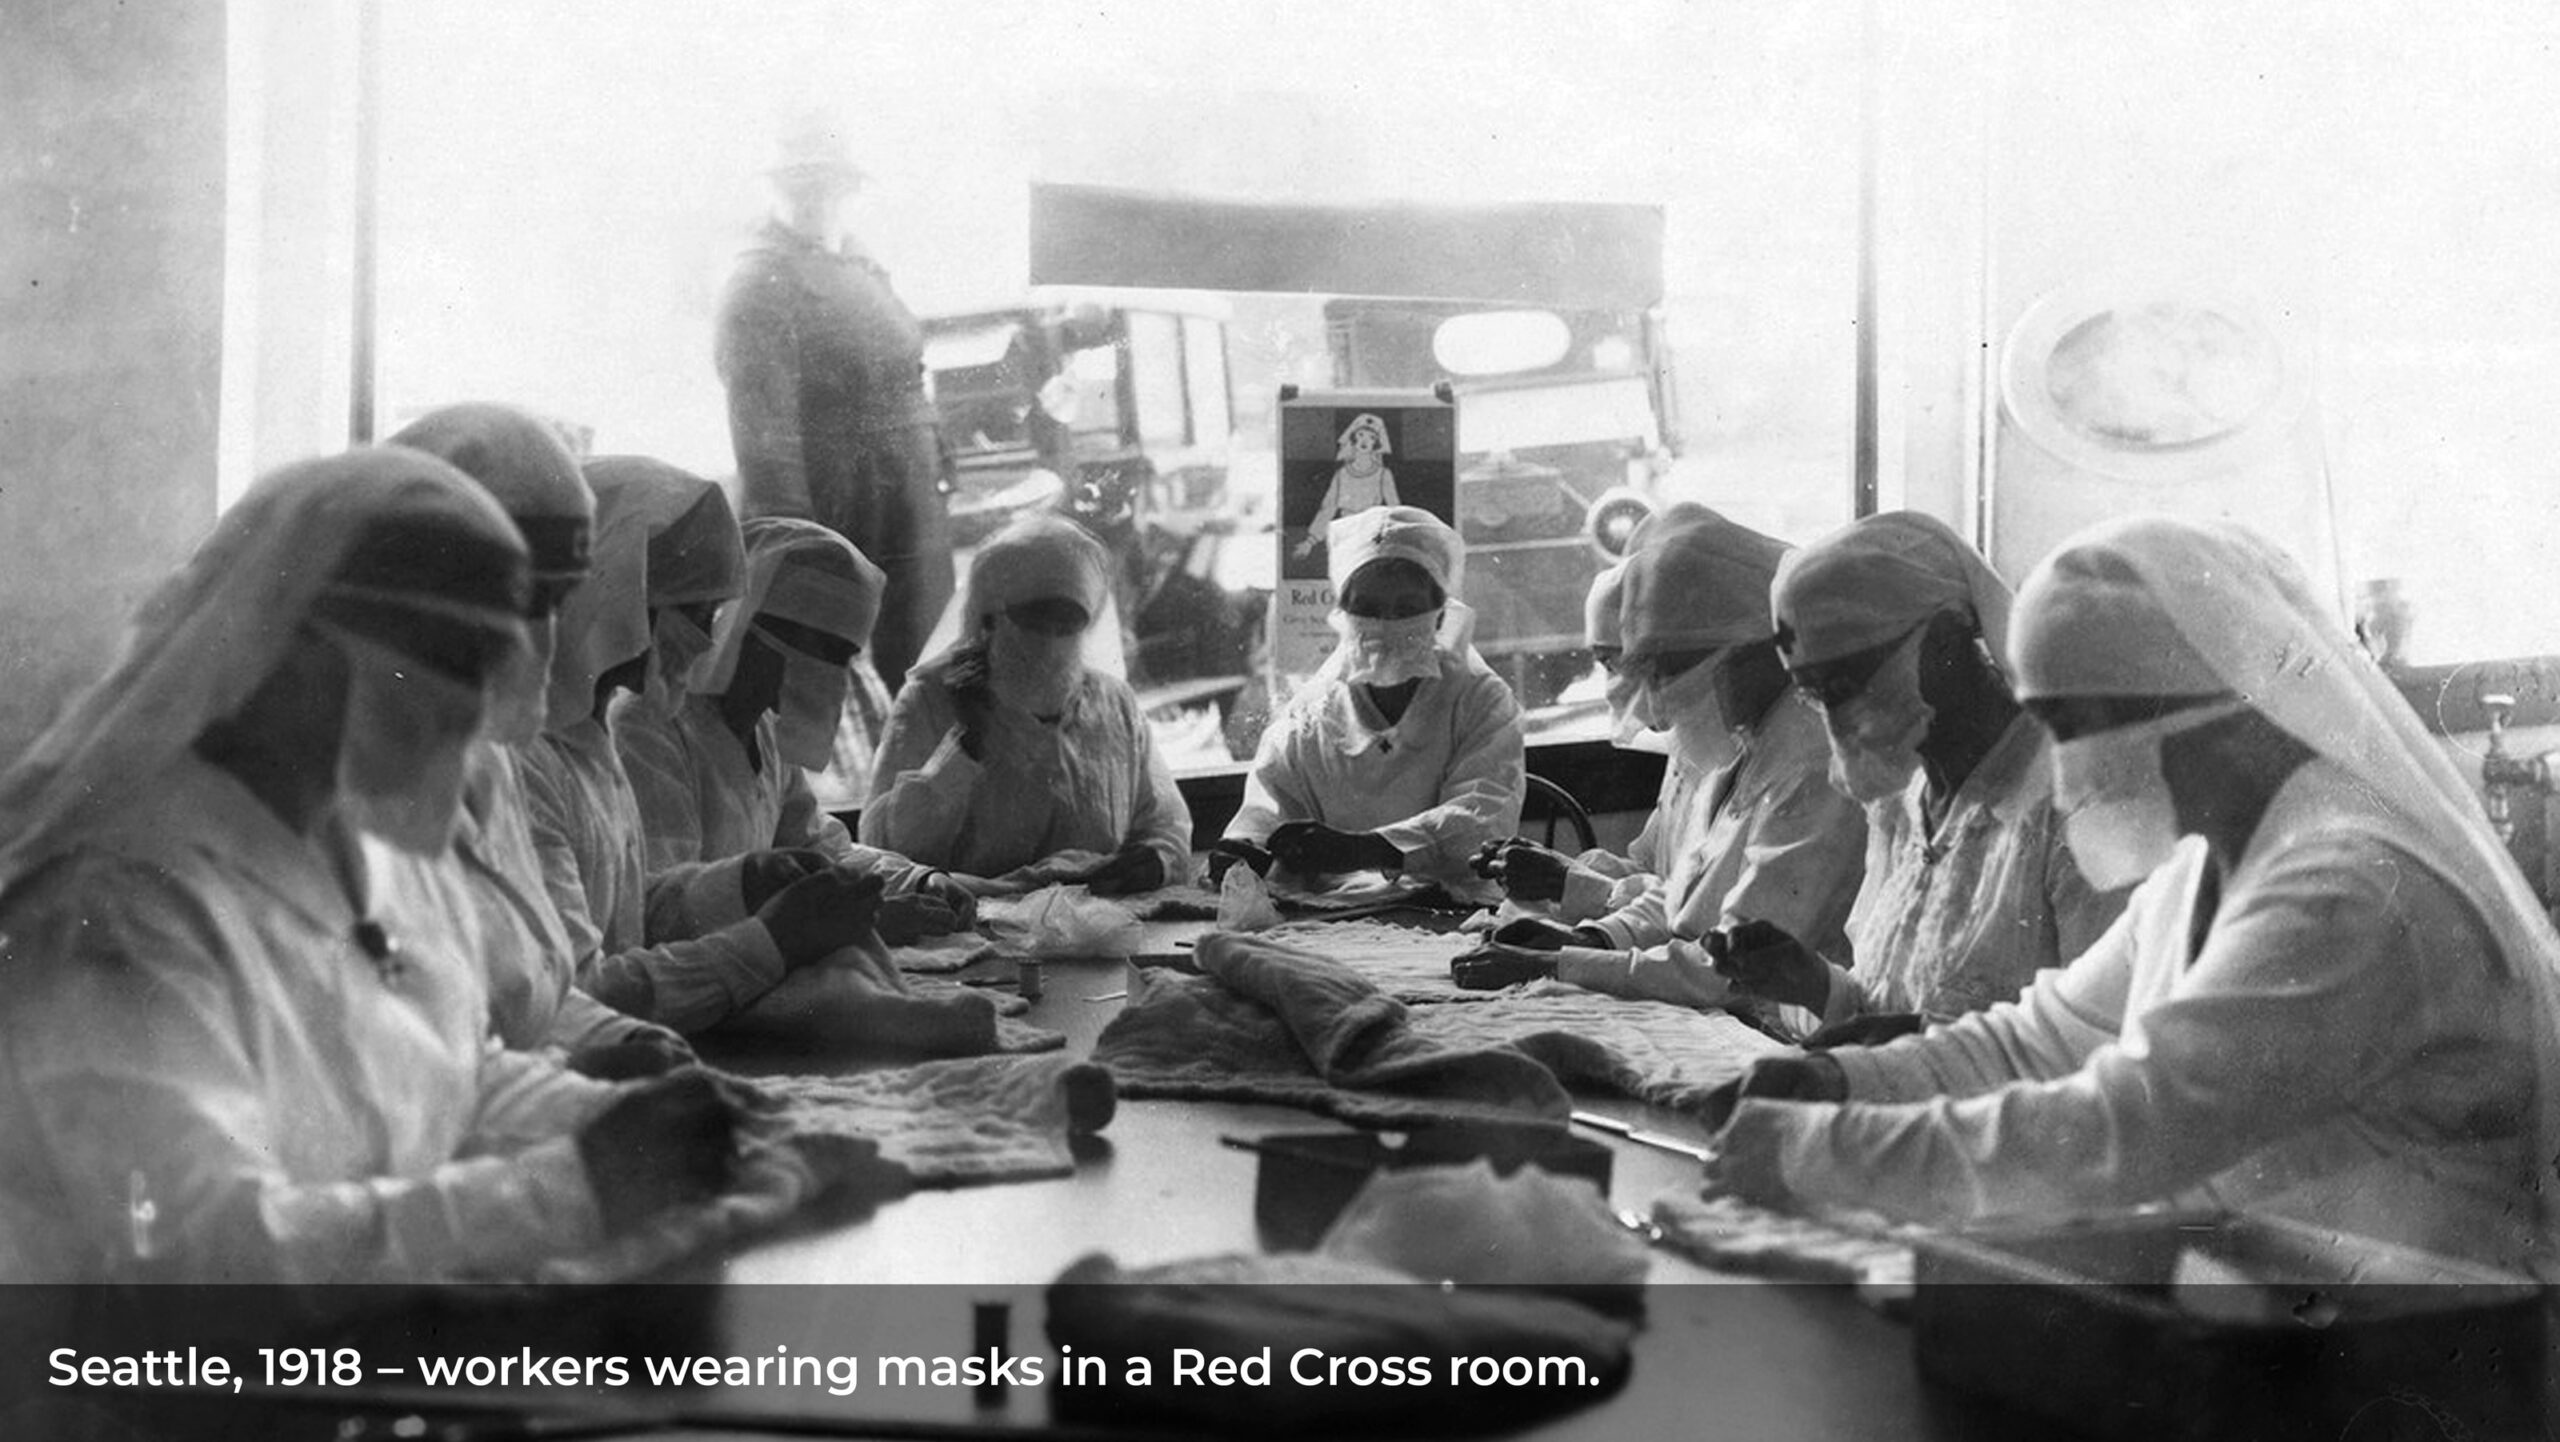 Nurses-Red Cross